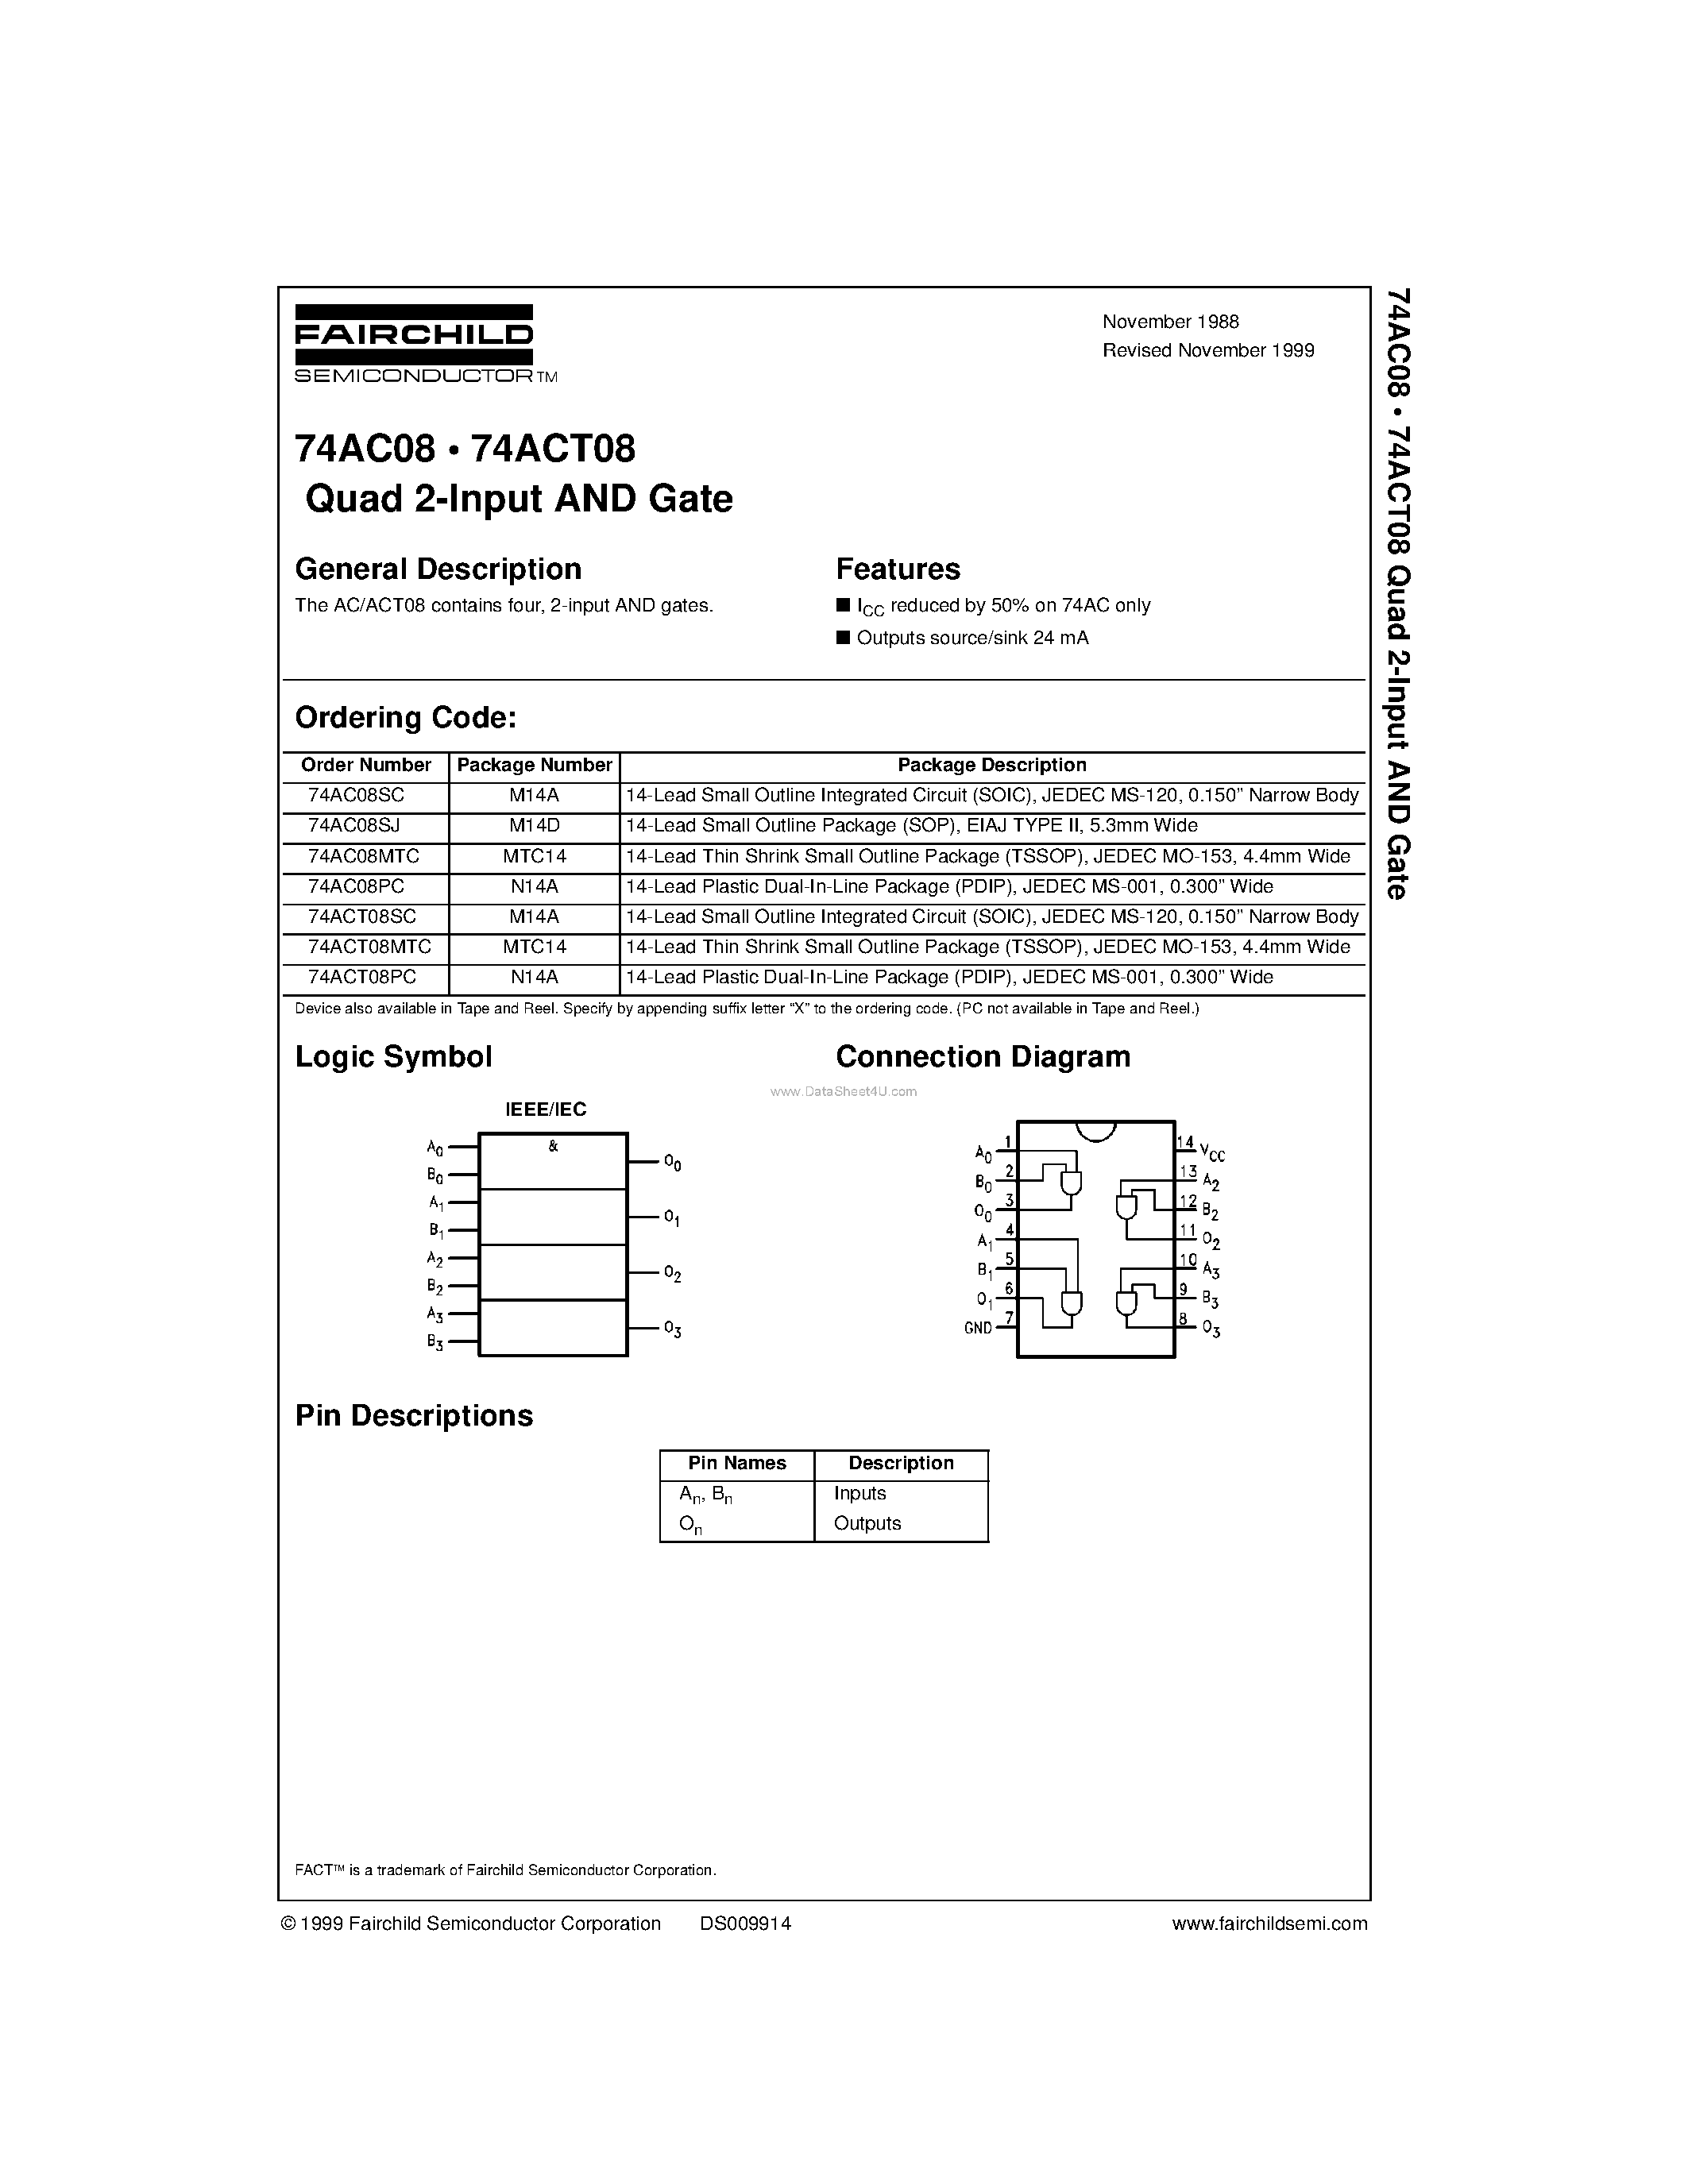 Datasheet 74AC08MTC - Quad 2-Input AND Gate page 1